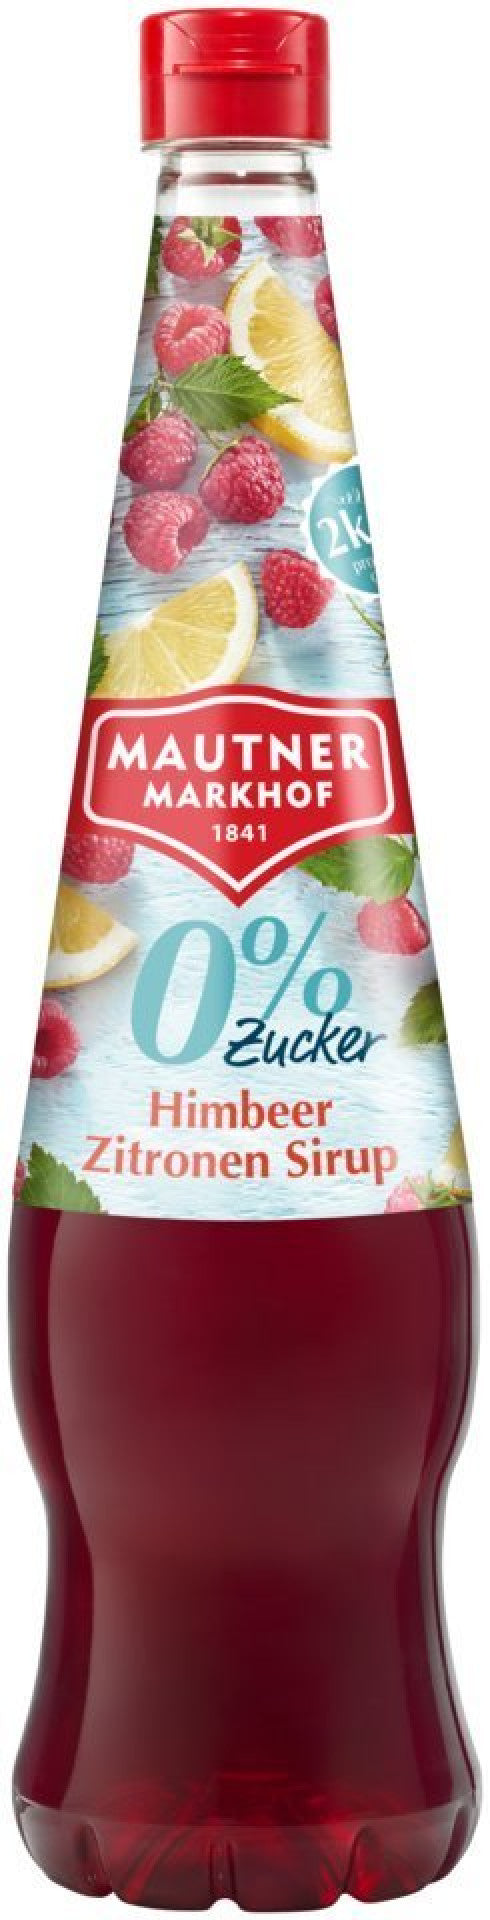 Mautner Markhof 0% Zucker Sirup Himbeere - Zitrone